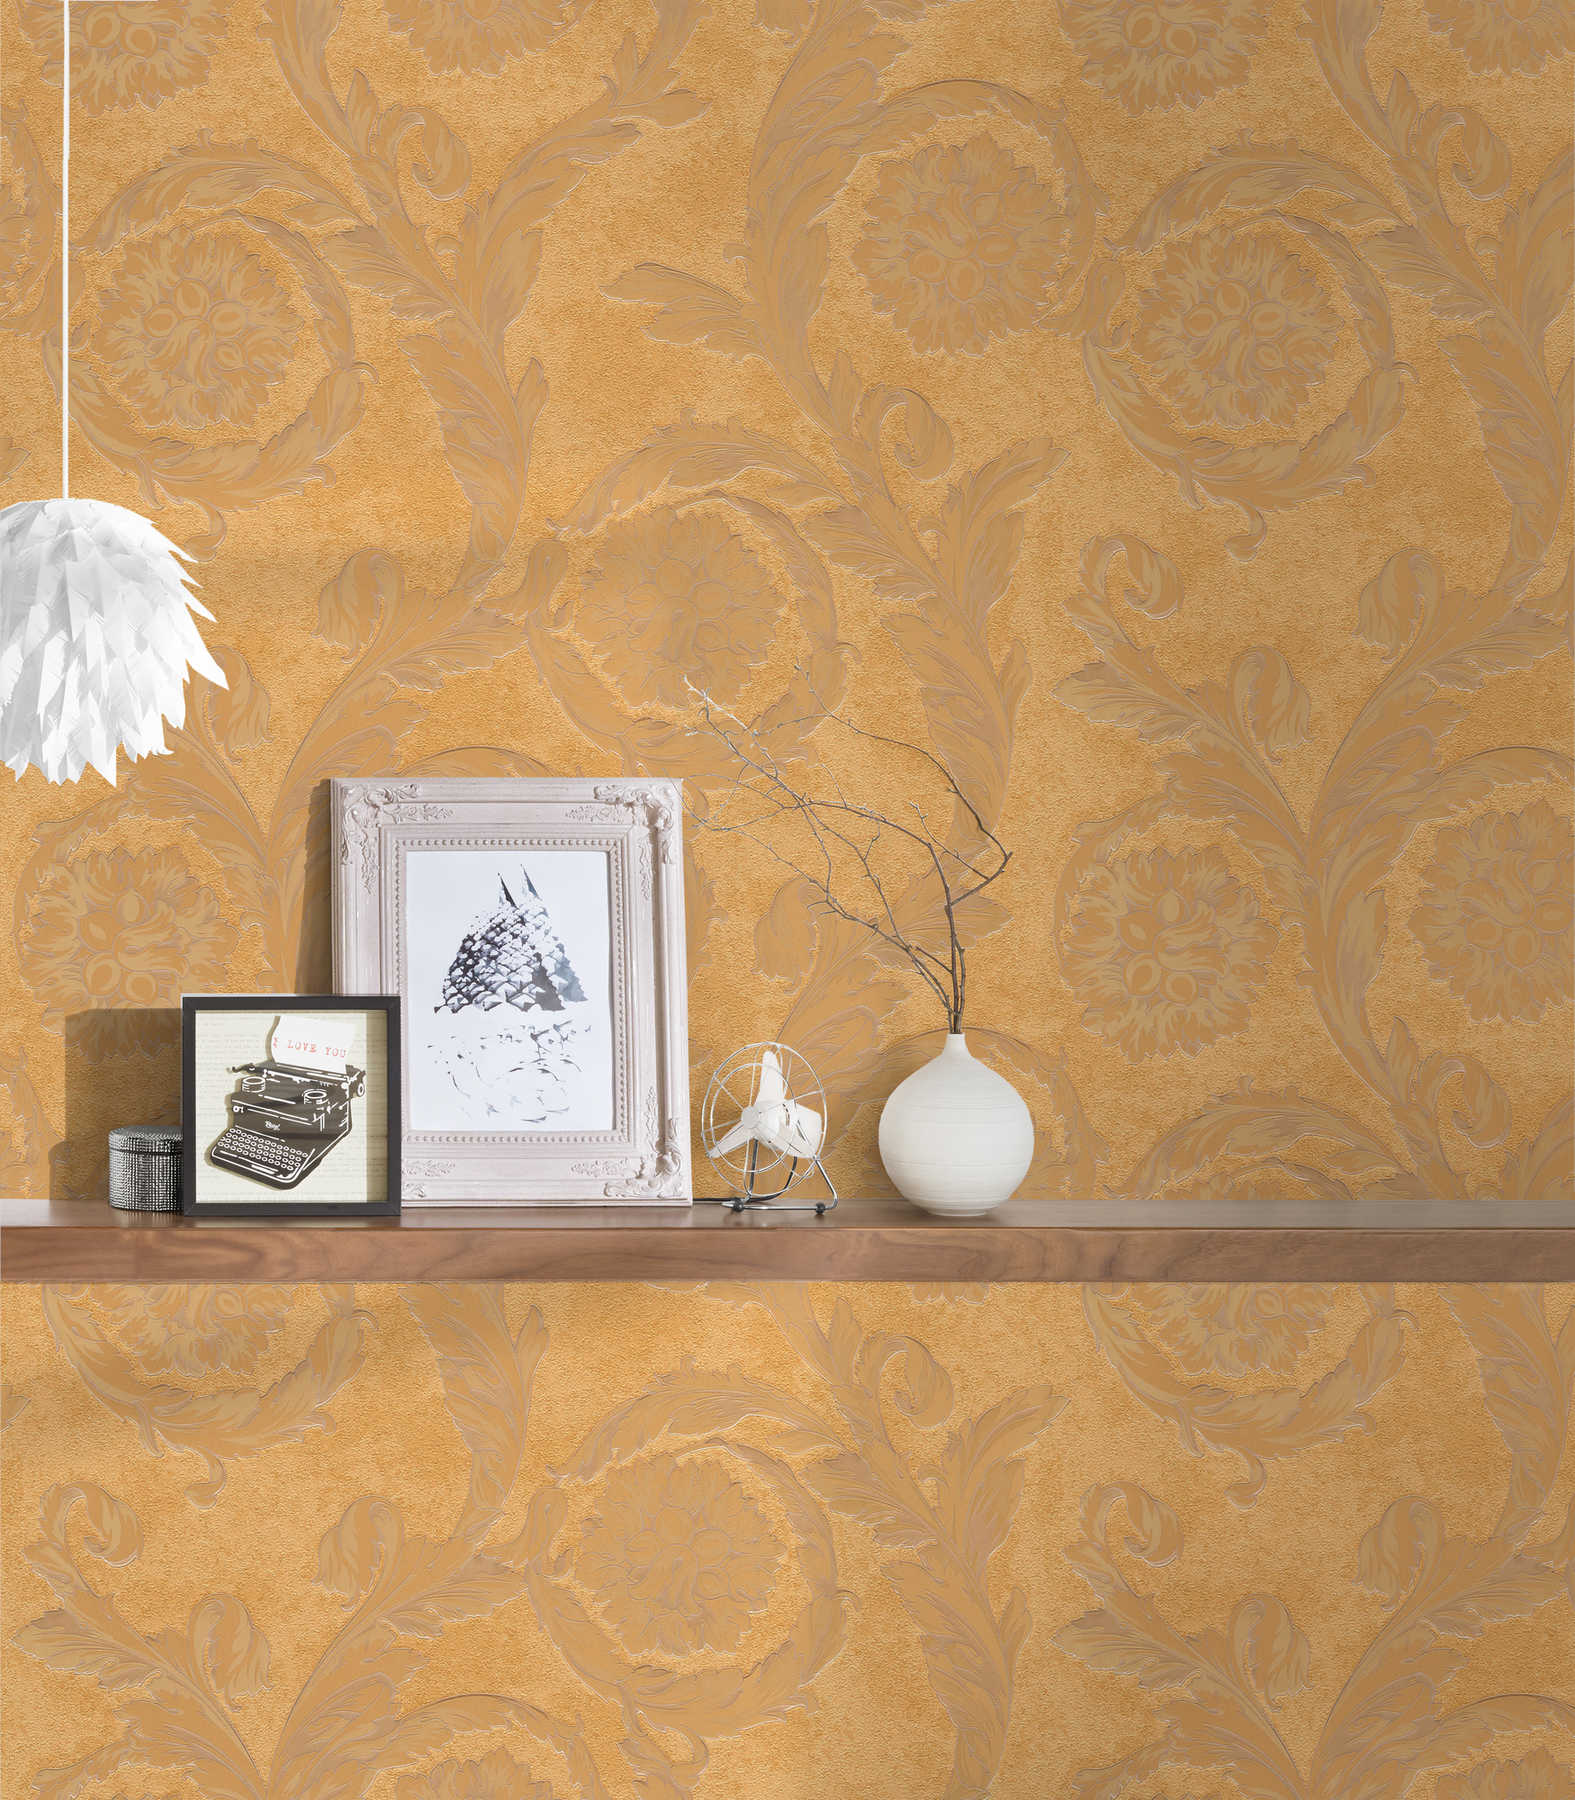             Metallic non-woven wallpaper brass ornament decor
        